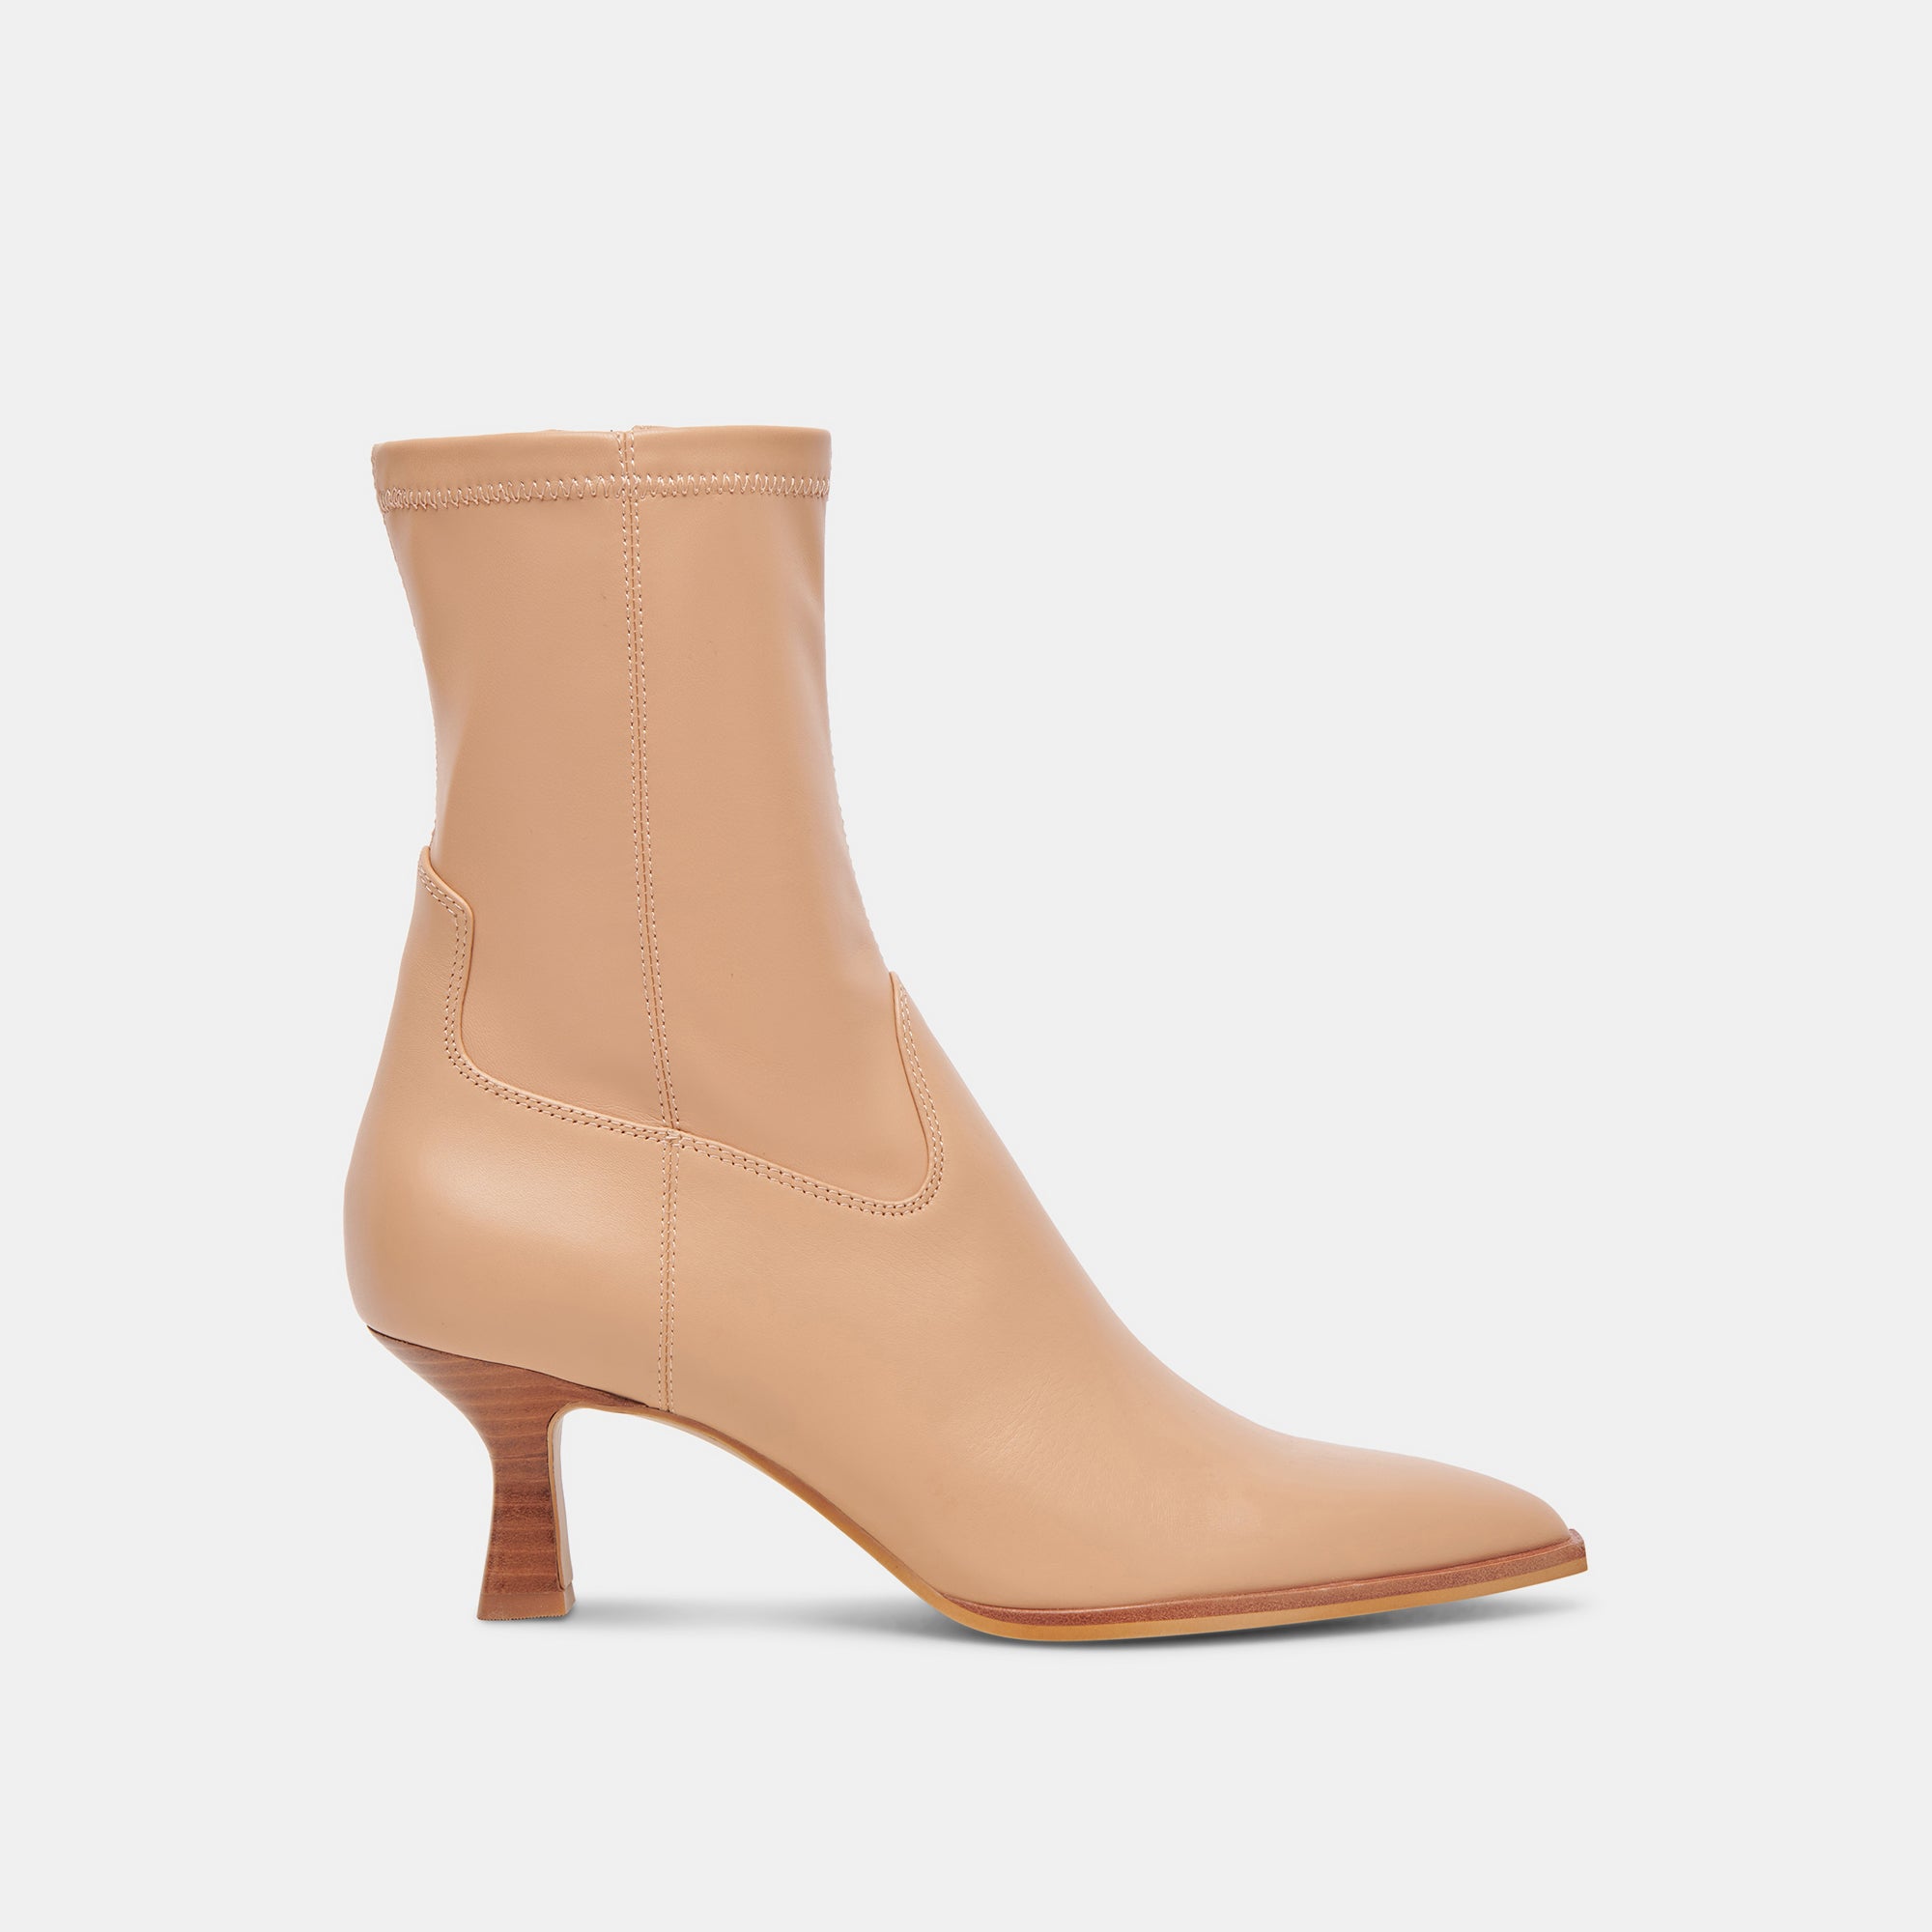 Thigh High Brown Genuine Leather Boots | Tajna Shoes – Tajna Club